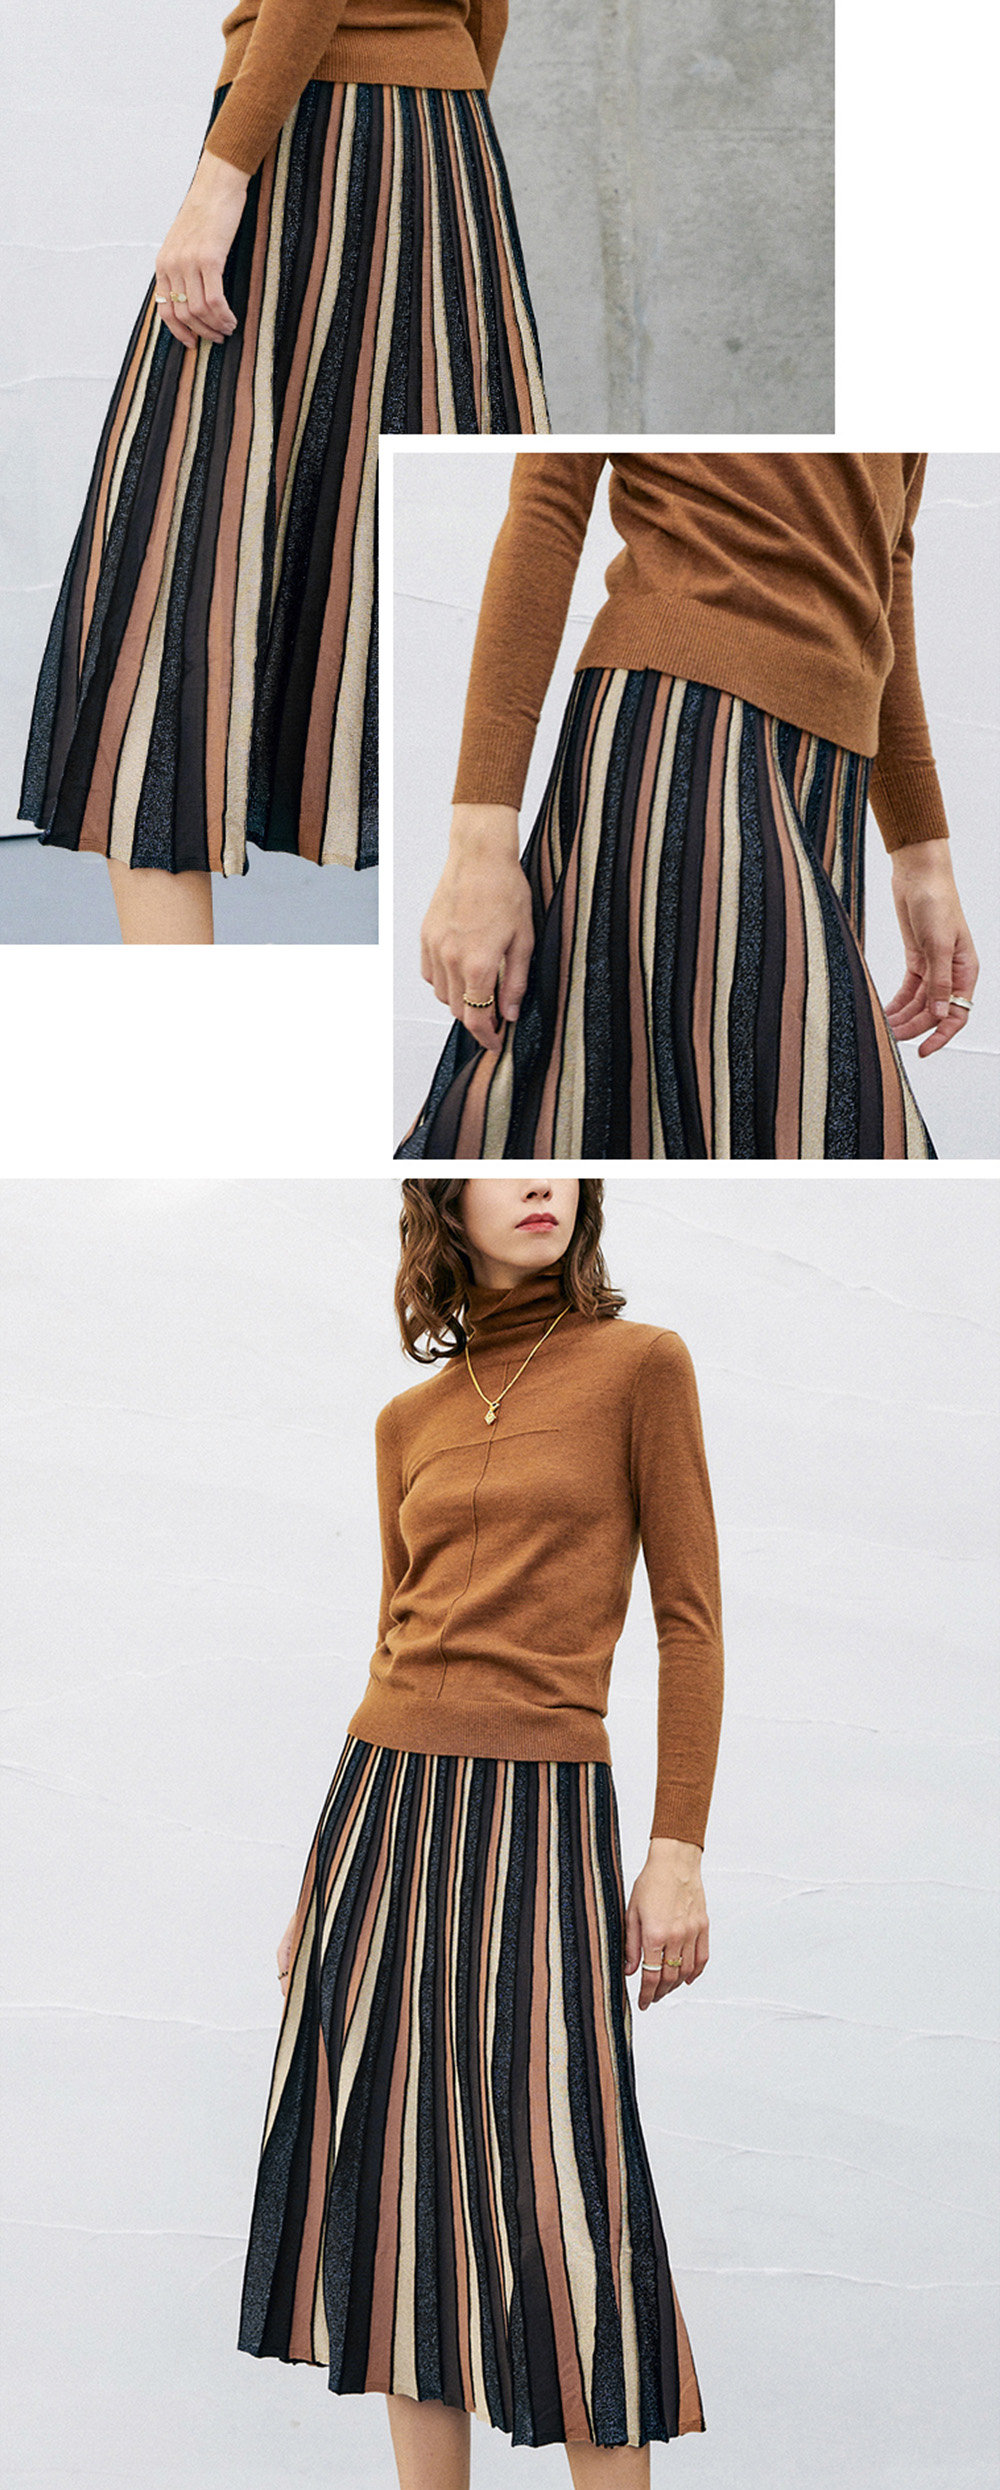 Stylish Striped Skirt - ApolloBox